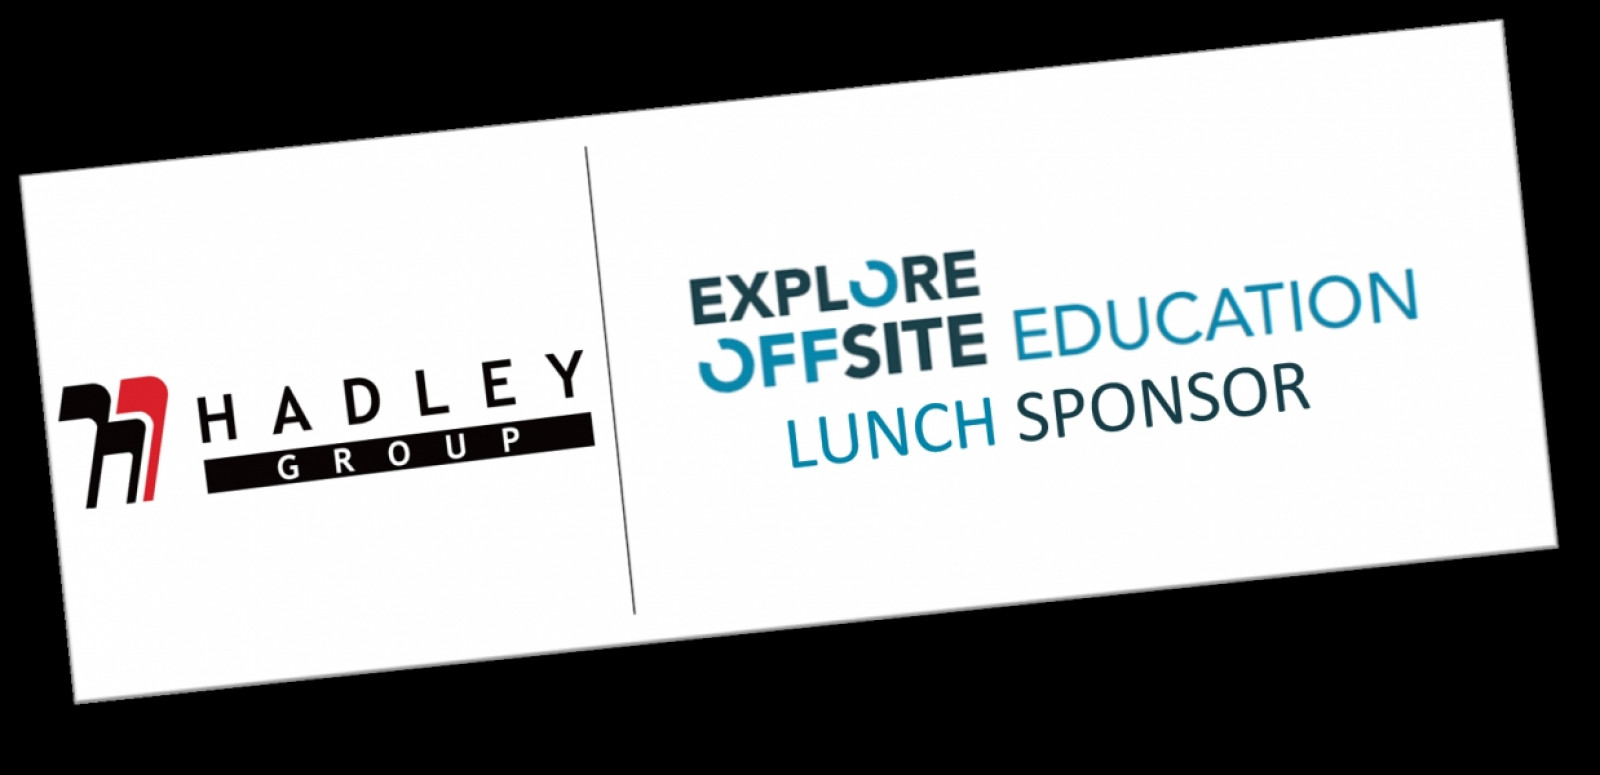 Hadley Group Sponsoring Explore Offsite Education...